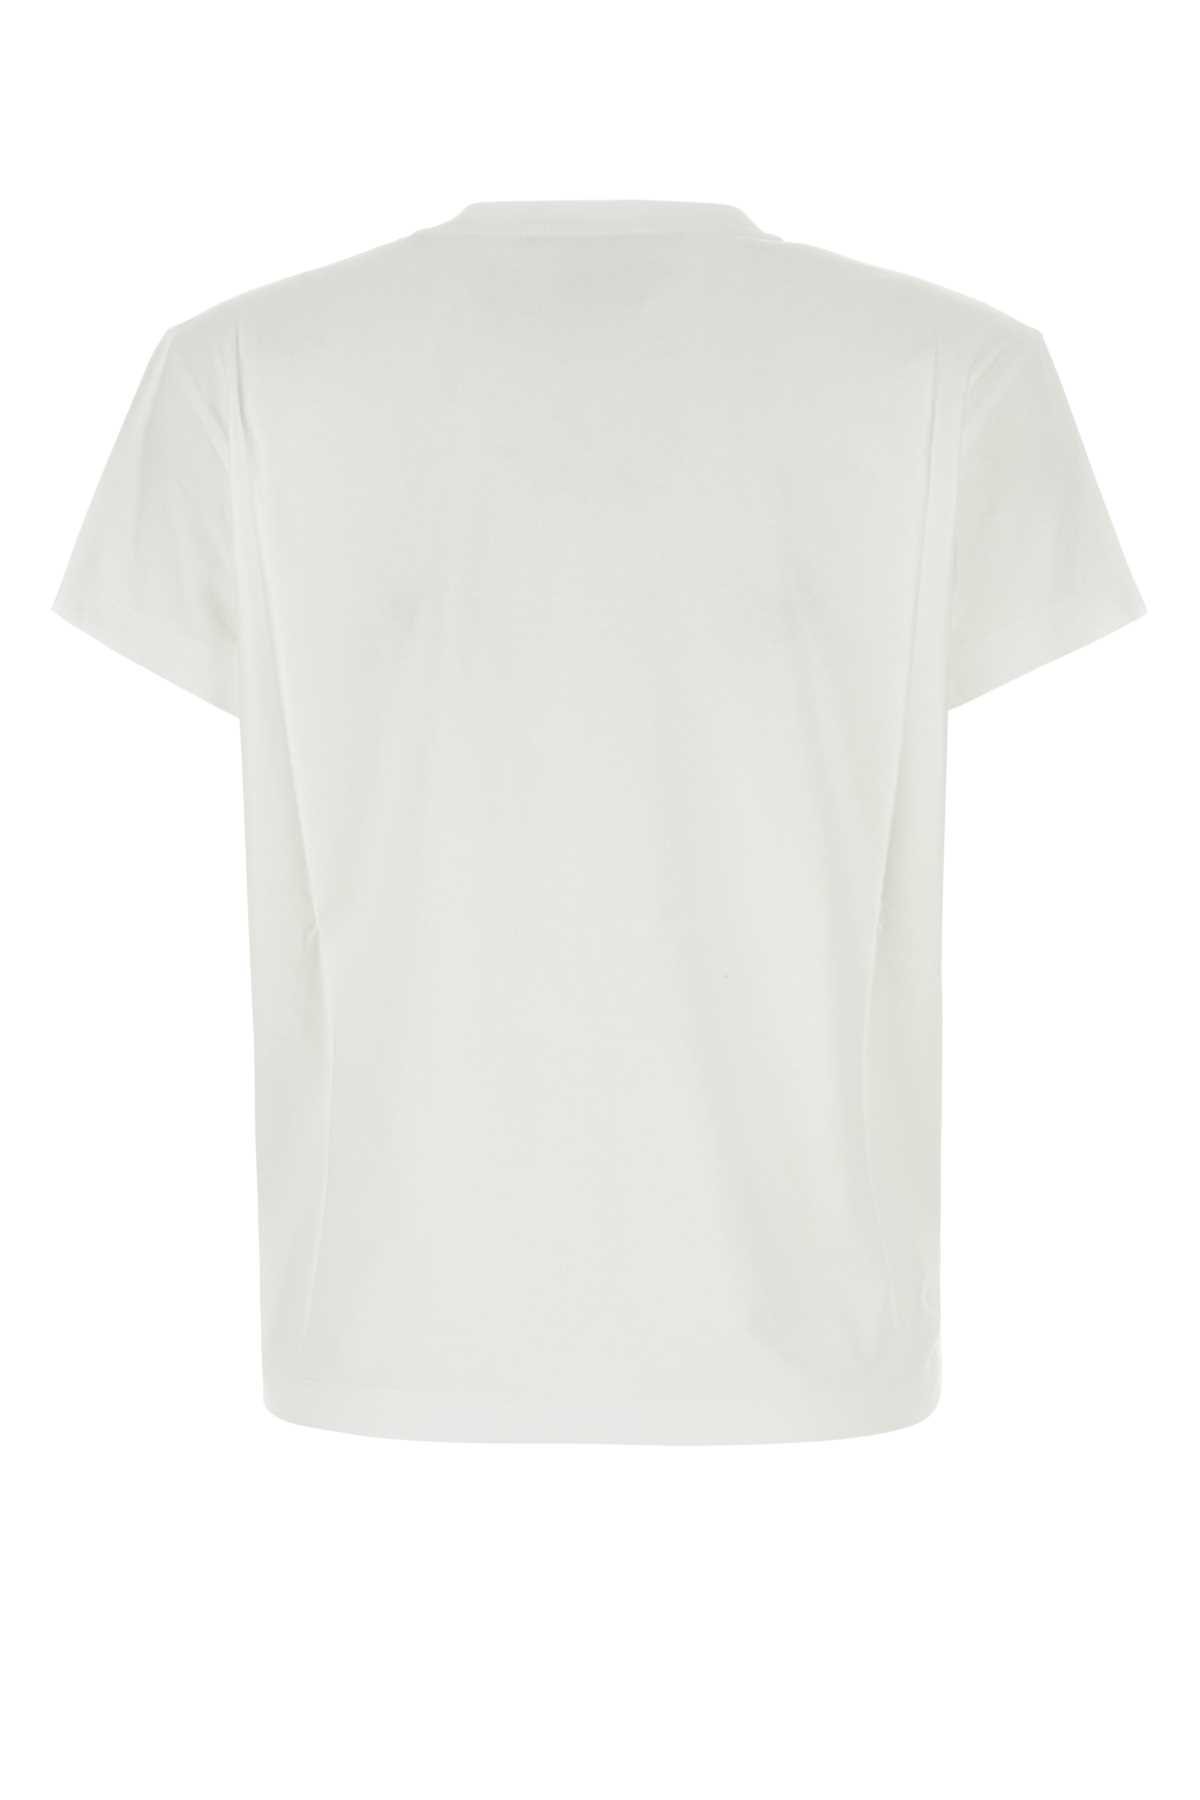 Stella Mccartney White Cotton T-shirt In Purewhite